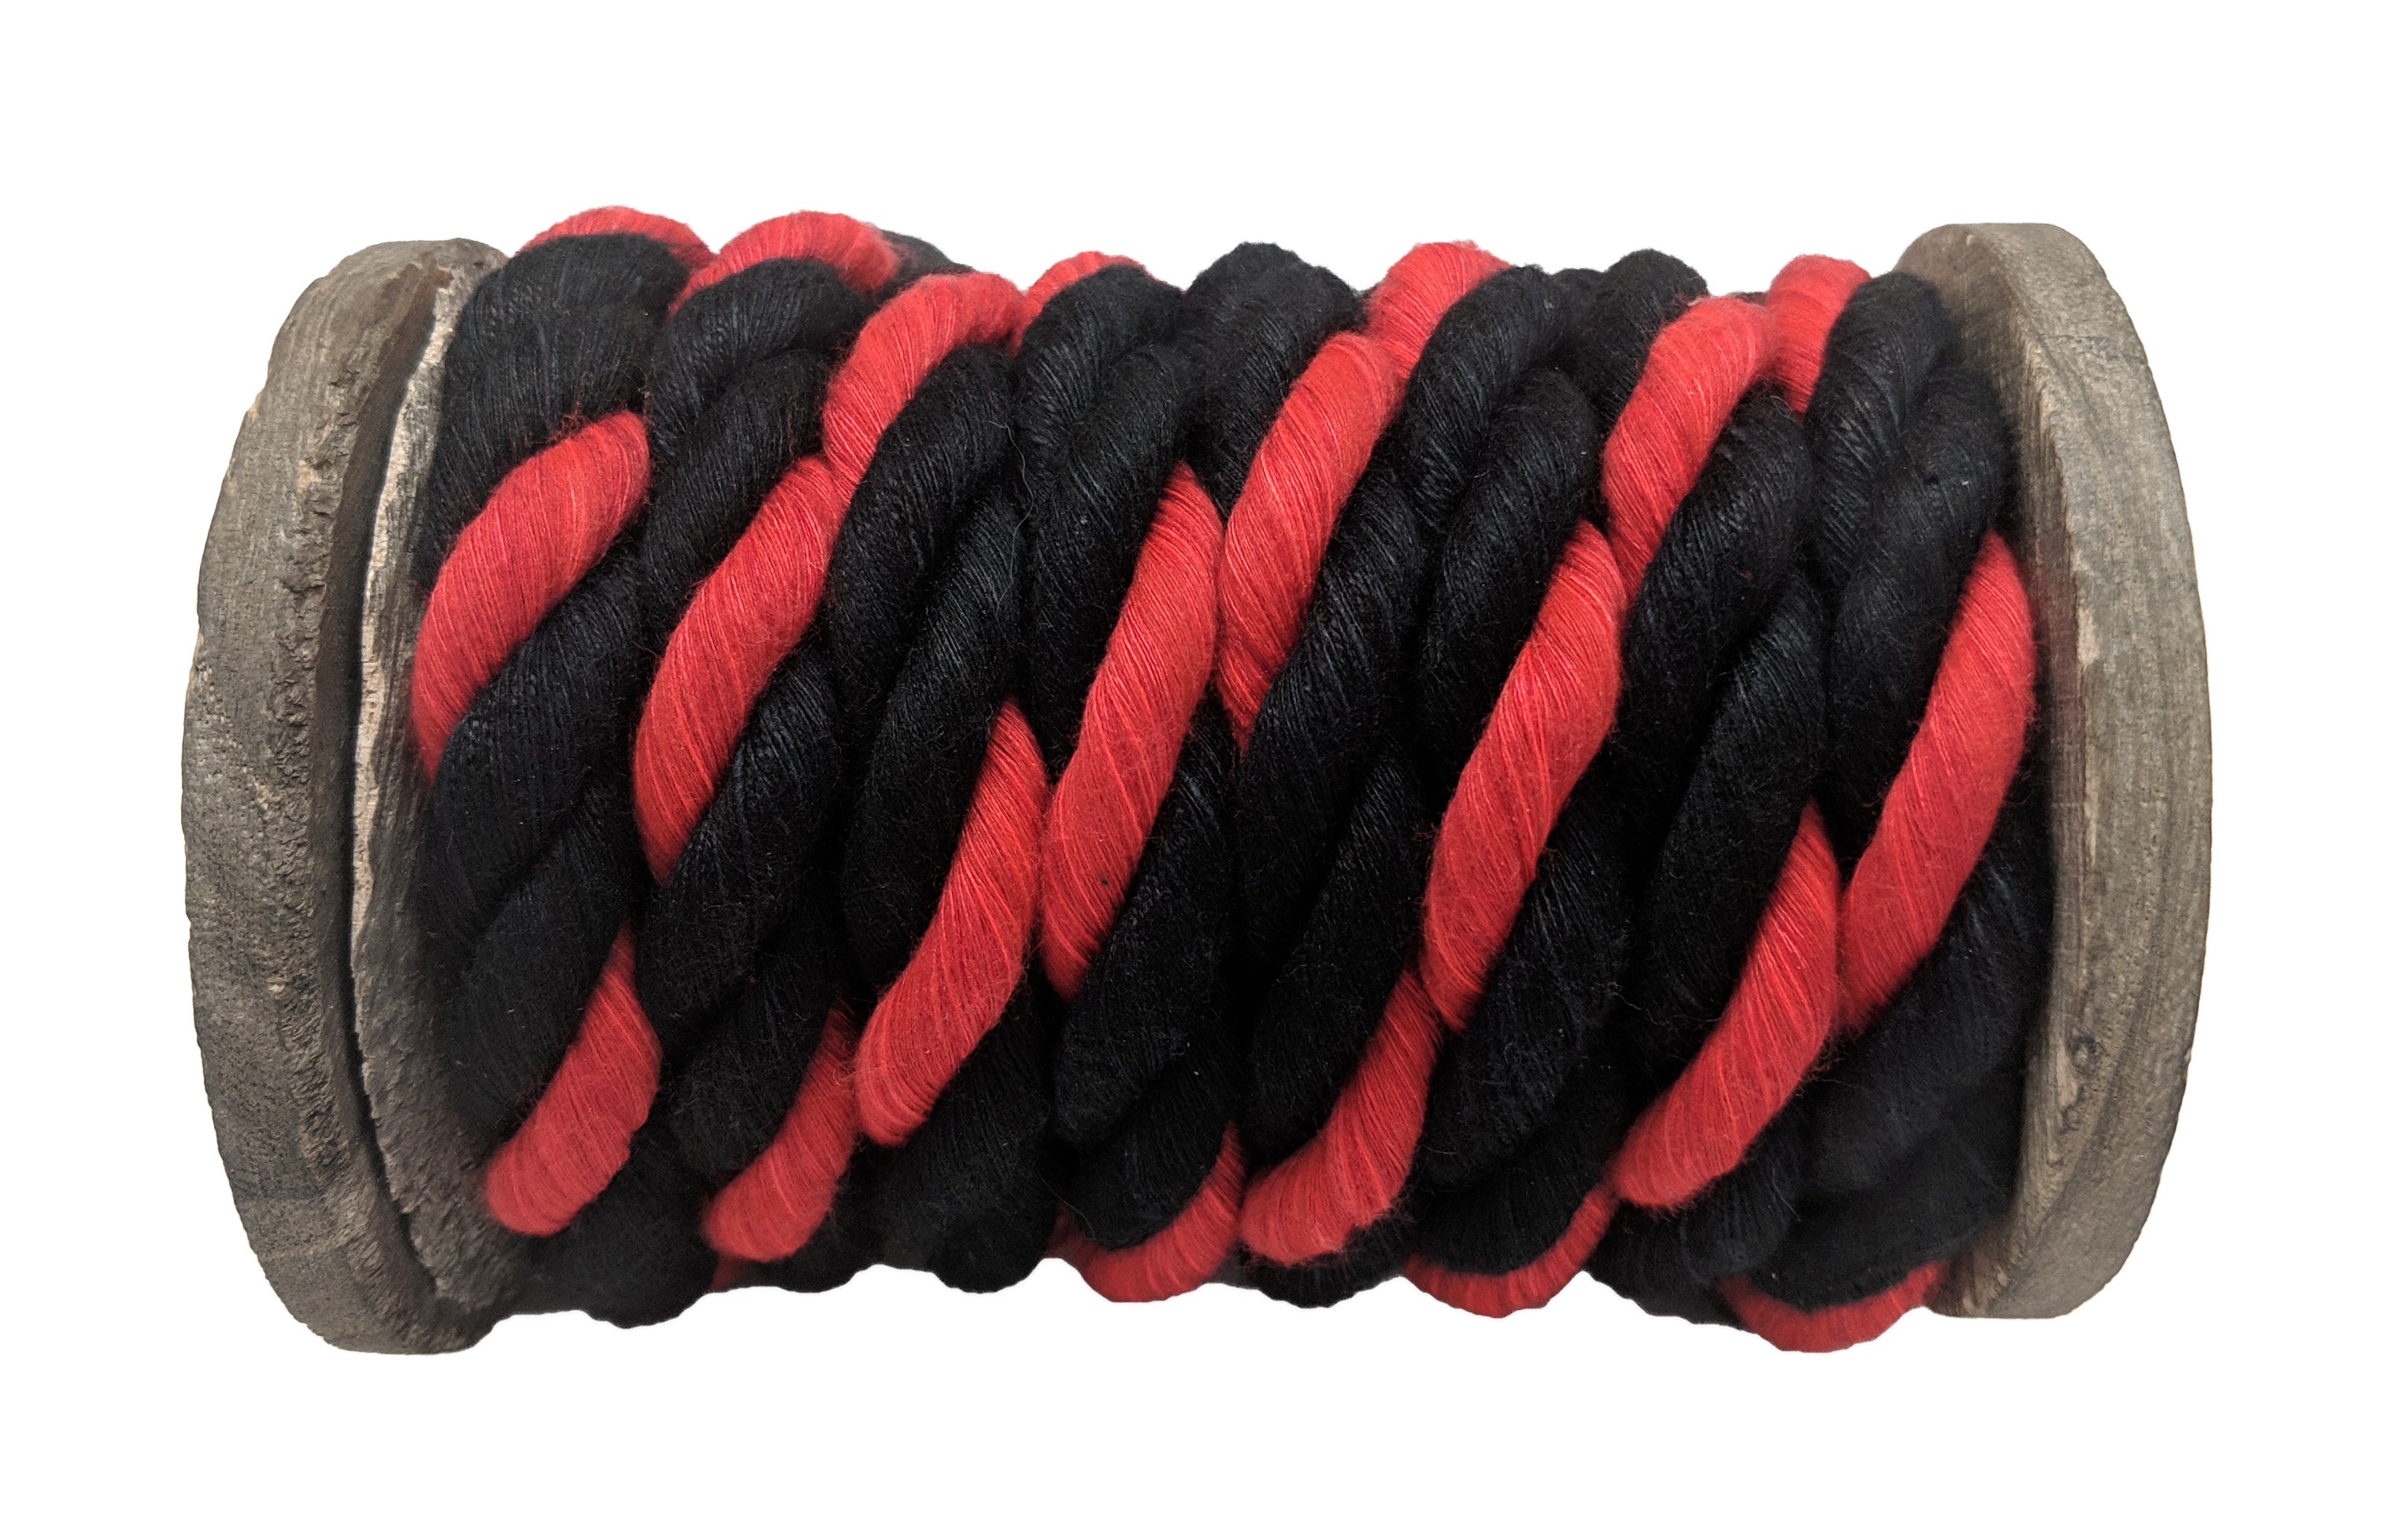 Ravenox Twisted Cotton Rope (chocolate) - 1/2-Inch x 50-Feet - 13641845342298